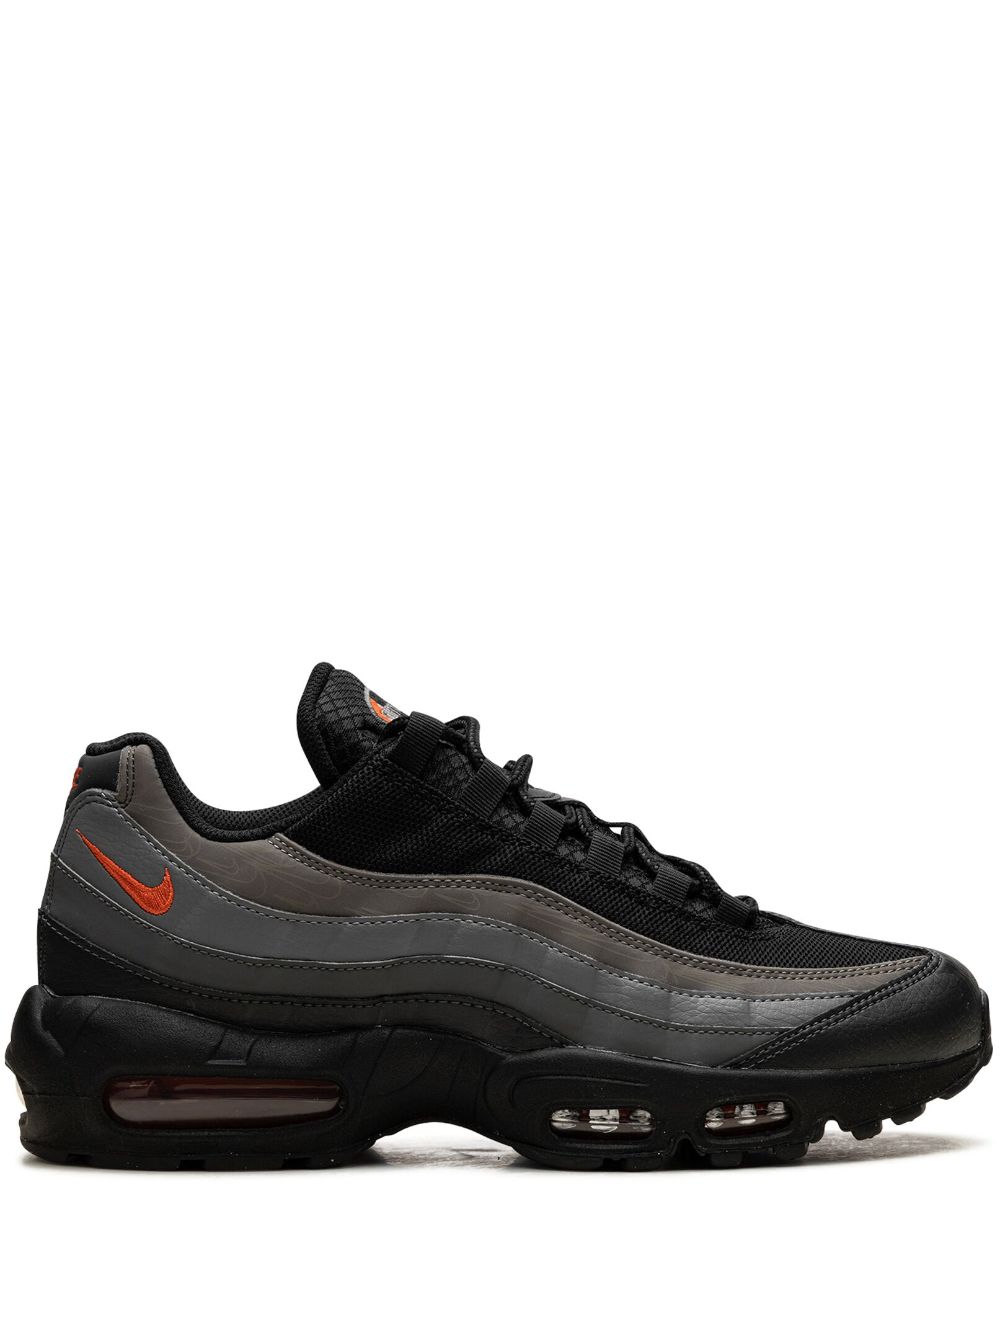 Nike Air Max 95 "Grey Reflective" sneakers Black